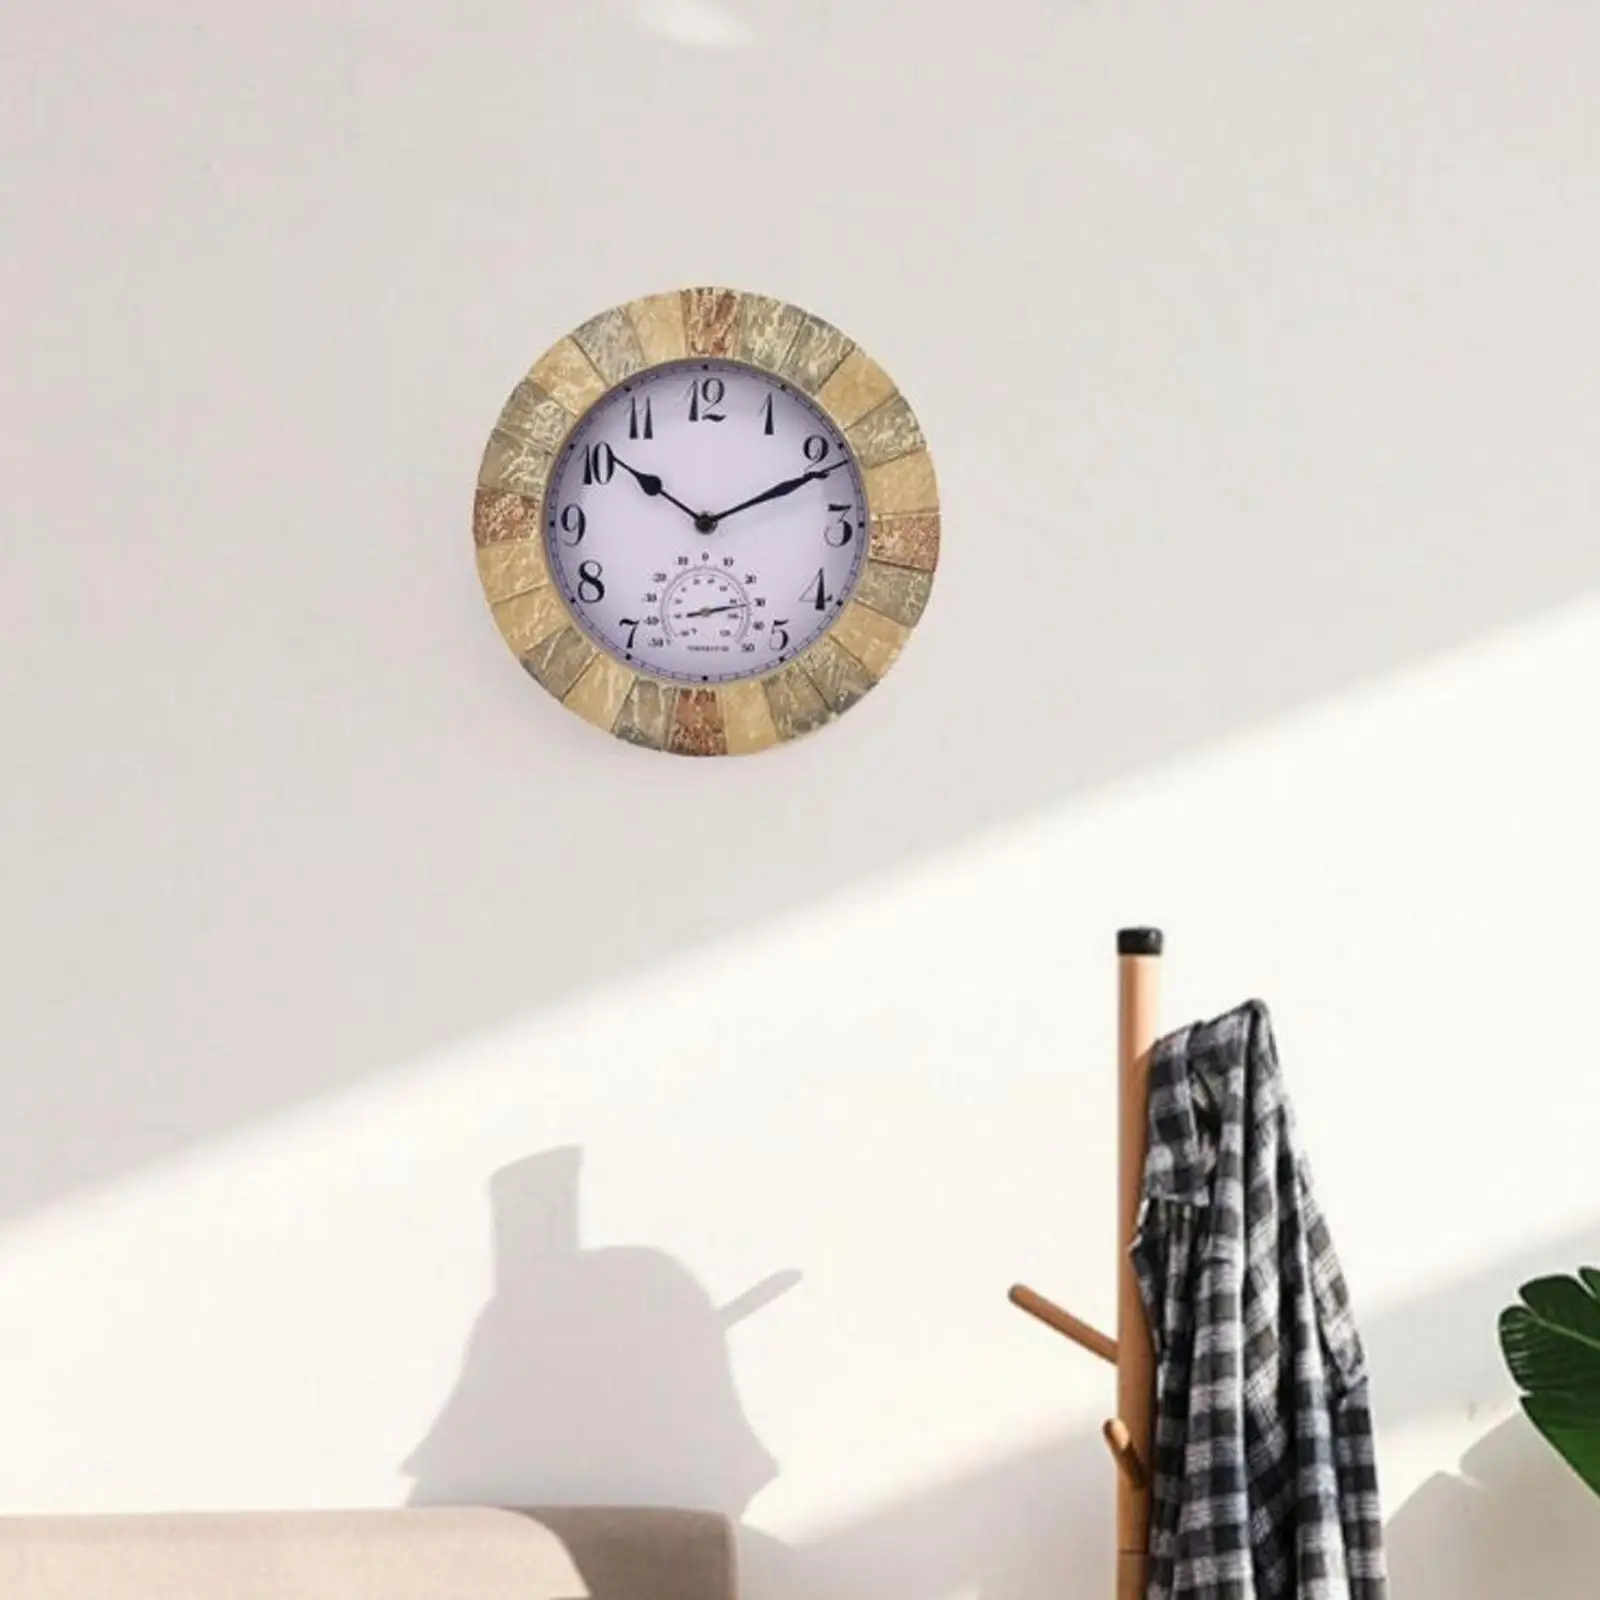 Multipurpose Outdoor Wall Clock Waterproof Temperature Display Silent 10inch Clocks for Garden Home Living Room Decor